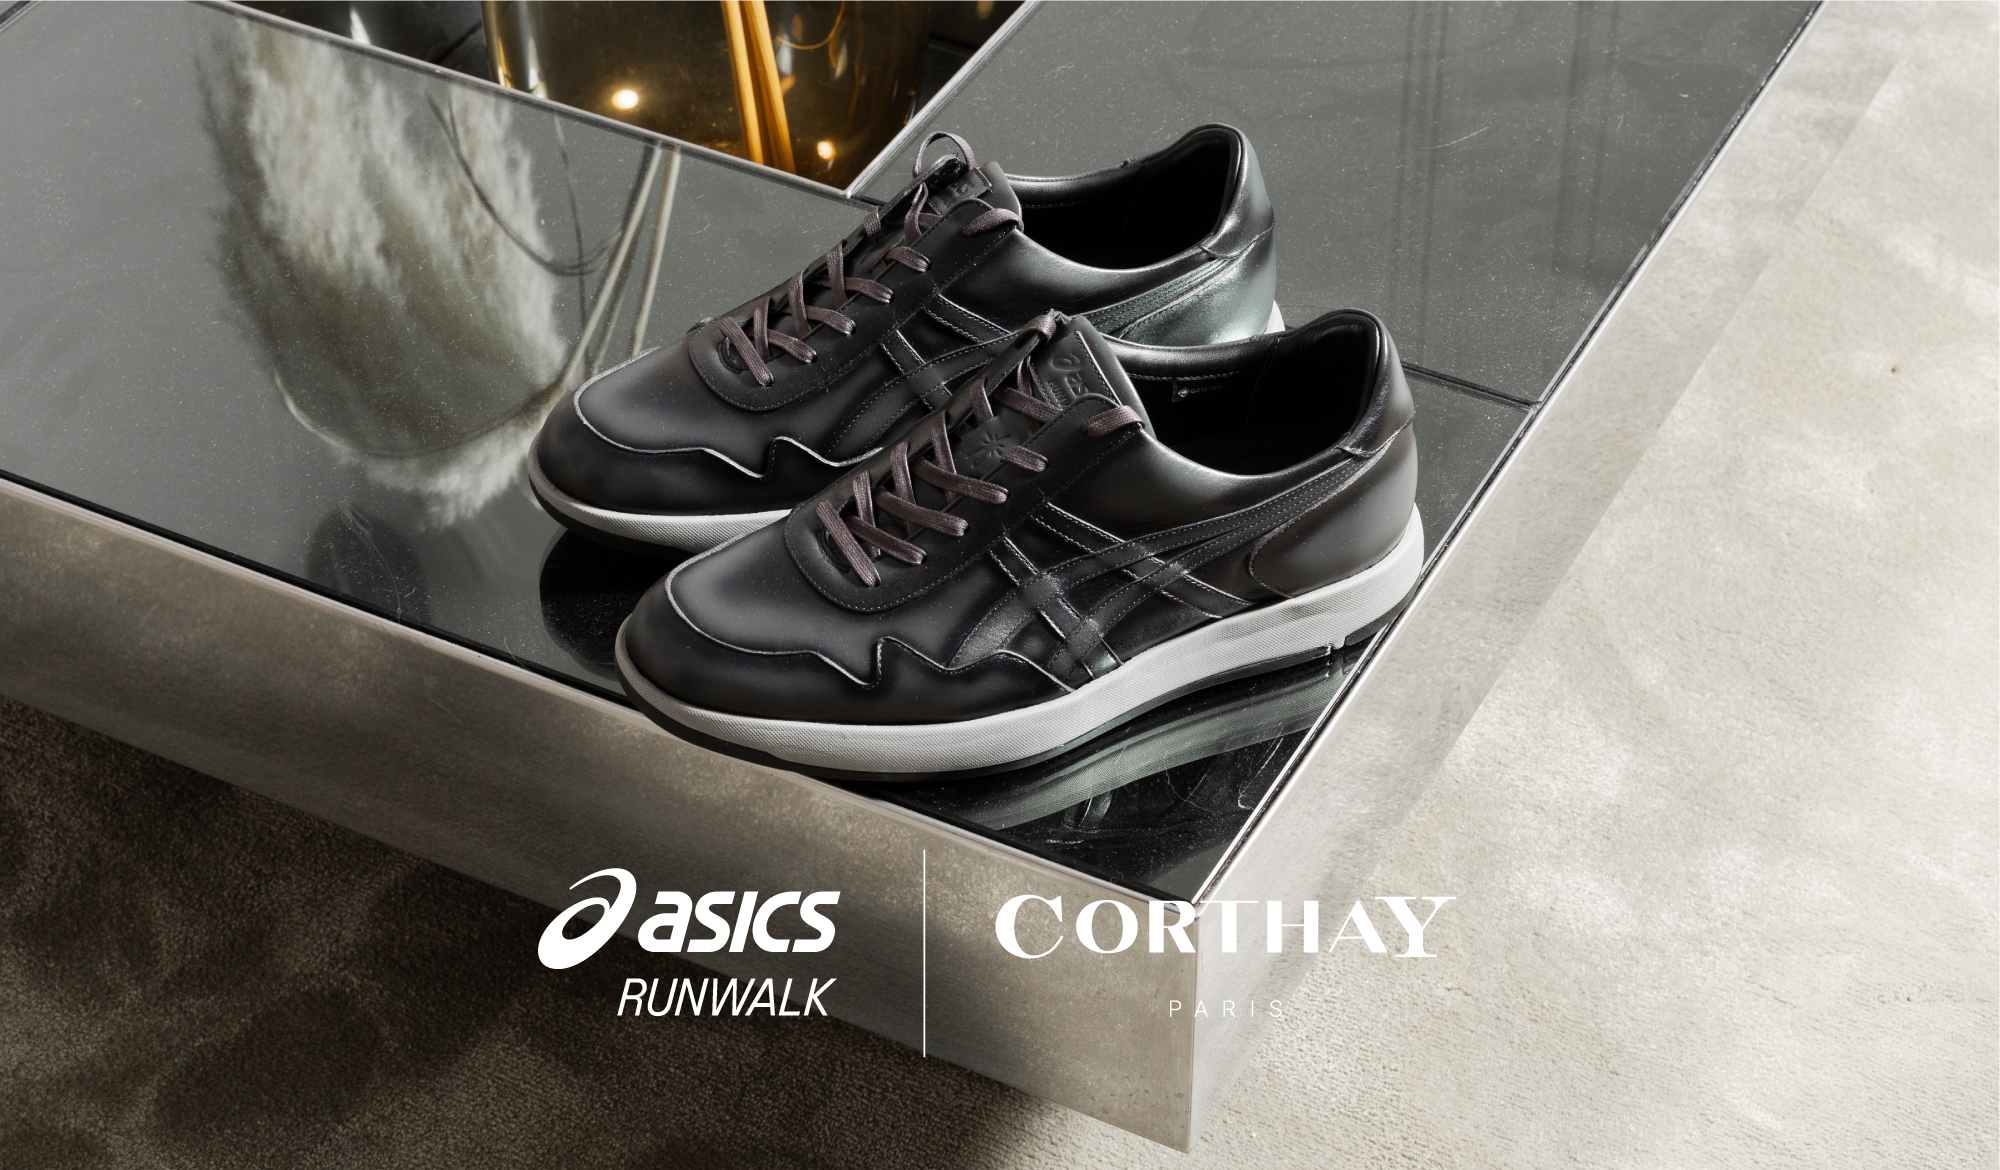 ASICS Runwalk & CORTHAY – フランスの高級靴ブランドCORTHAY（コルテ）とアシックスランウォークのコラボレーション